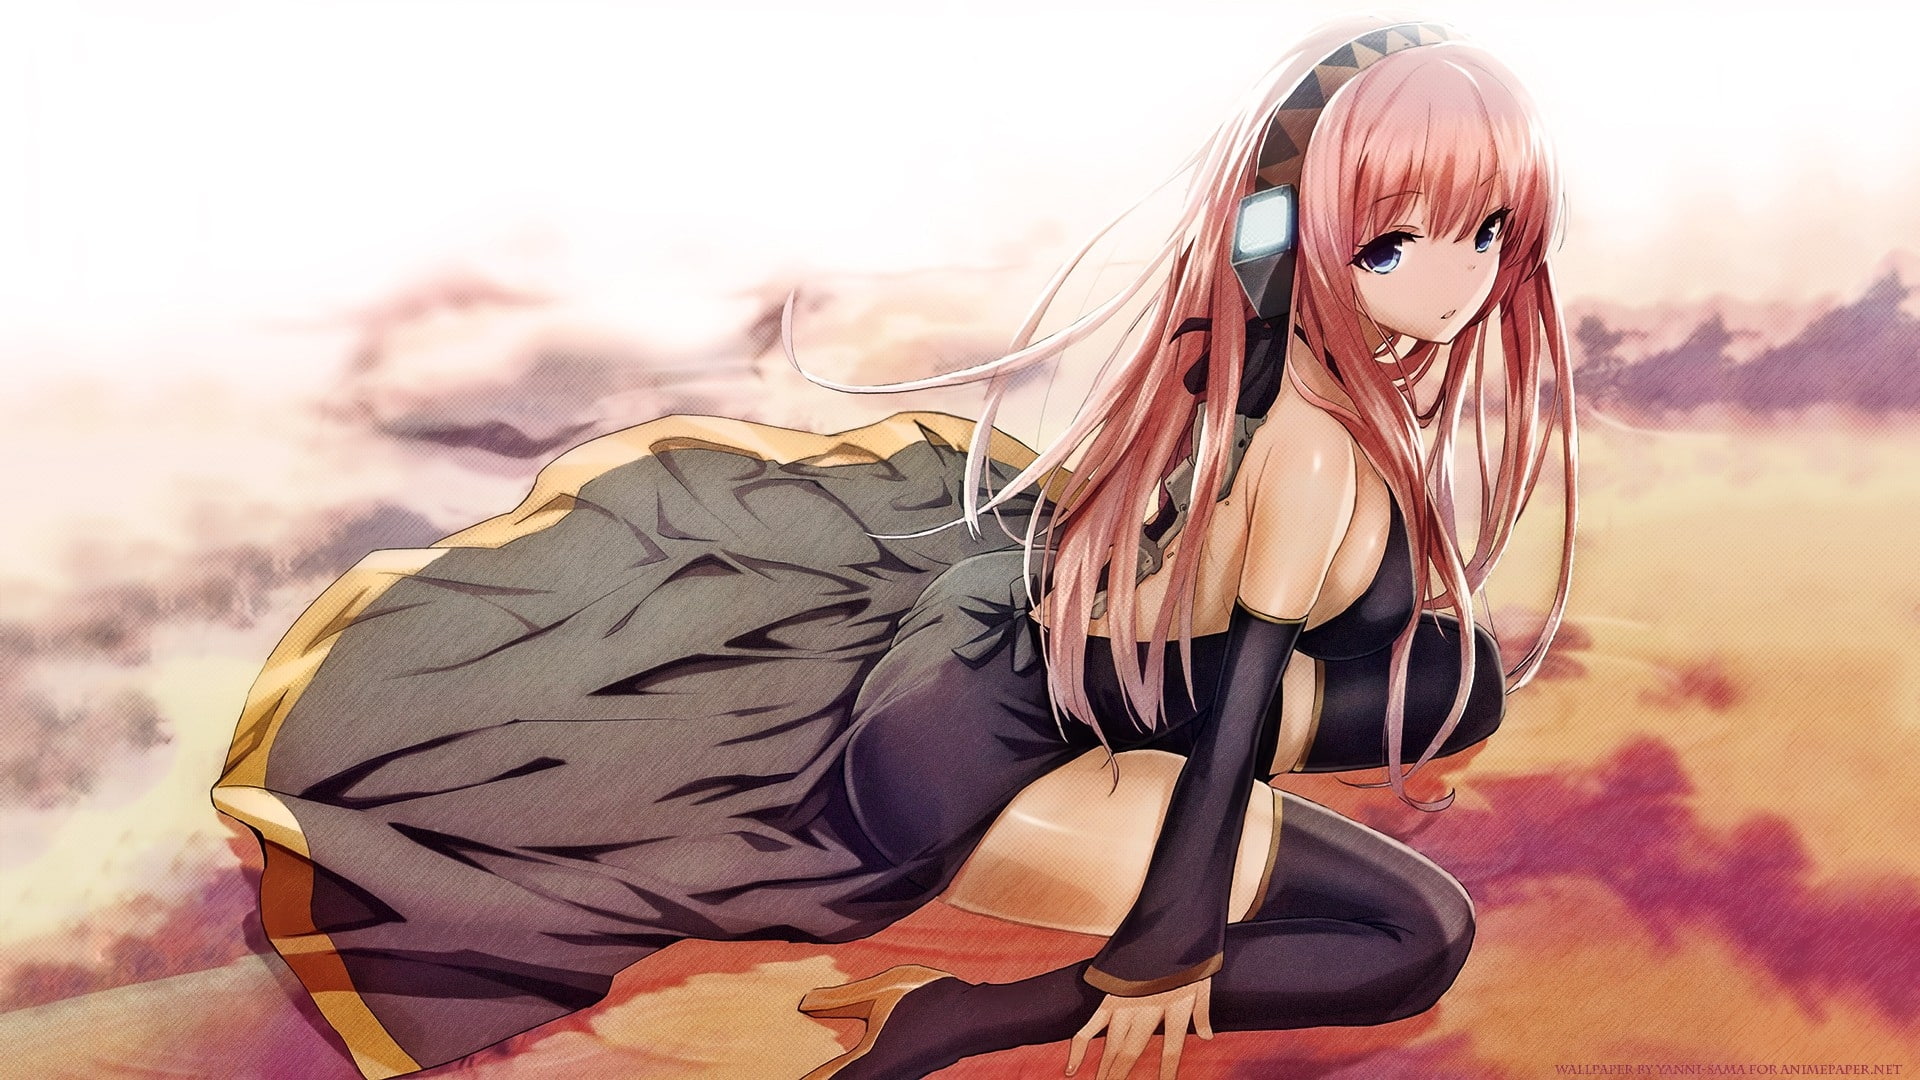 Free Download Hd Wallpaper Headphones Vocaloid Megurine Luka Headphones Girl Pink Hair Anime 